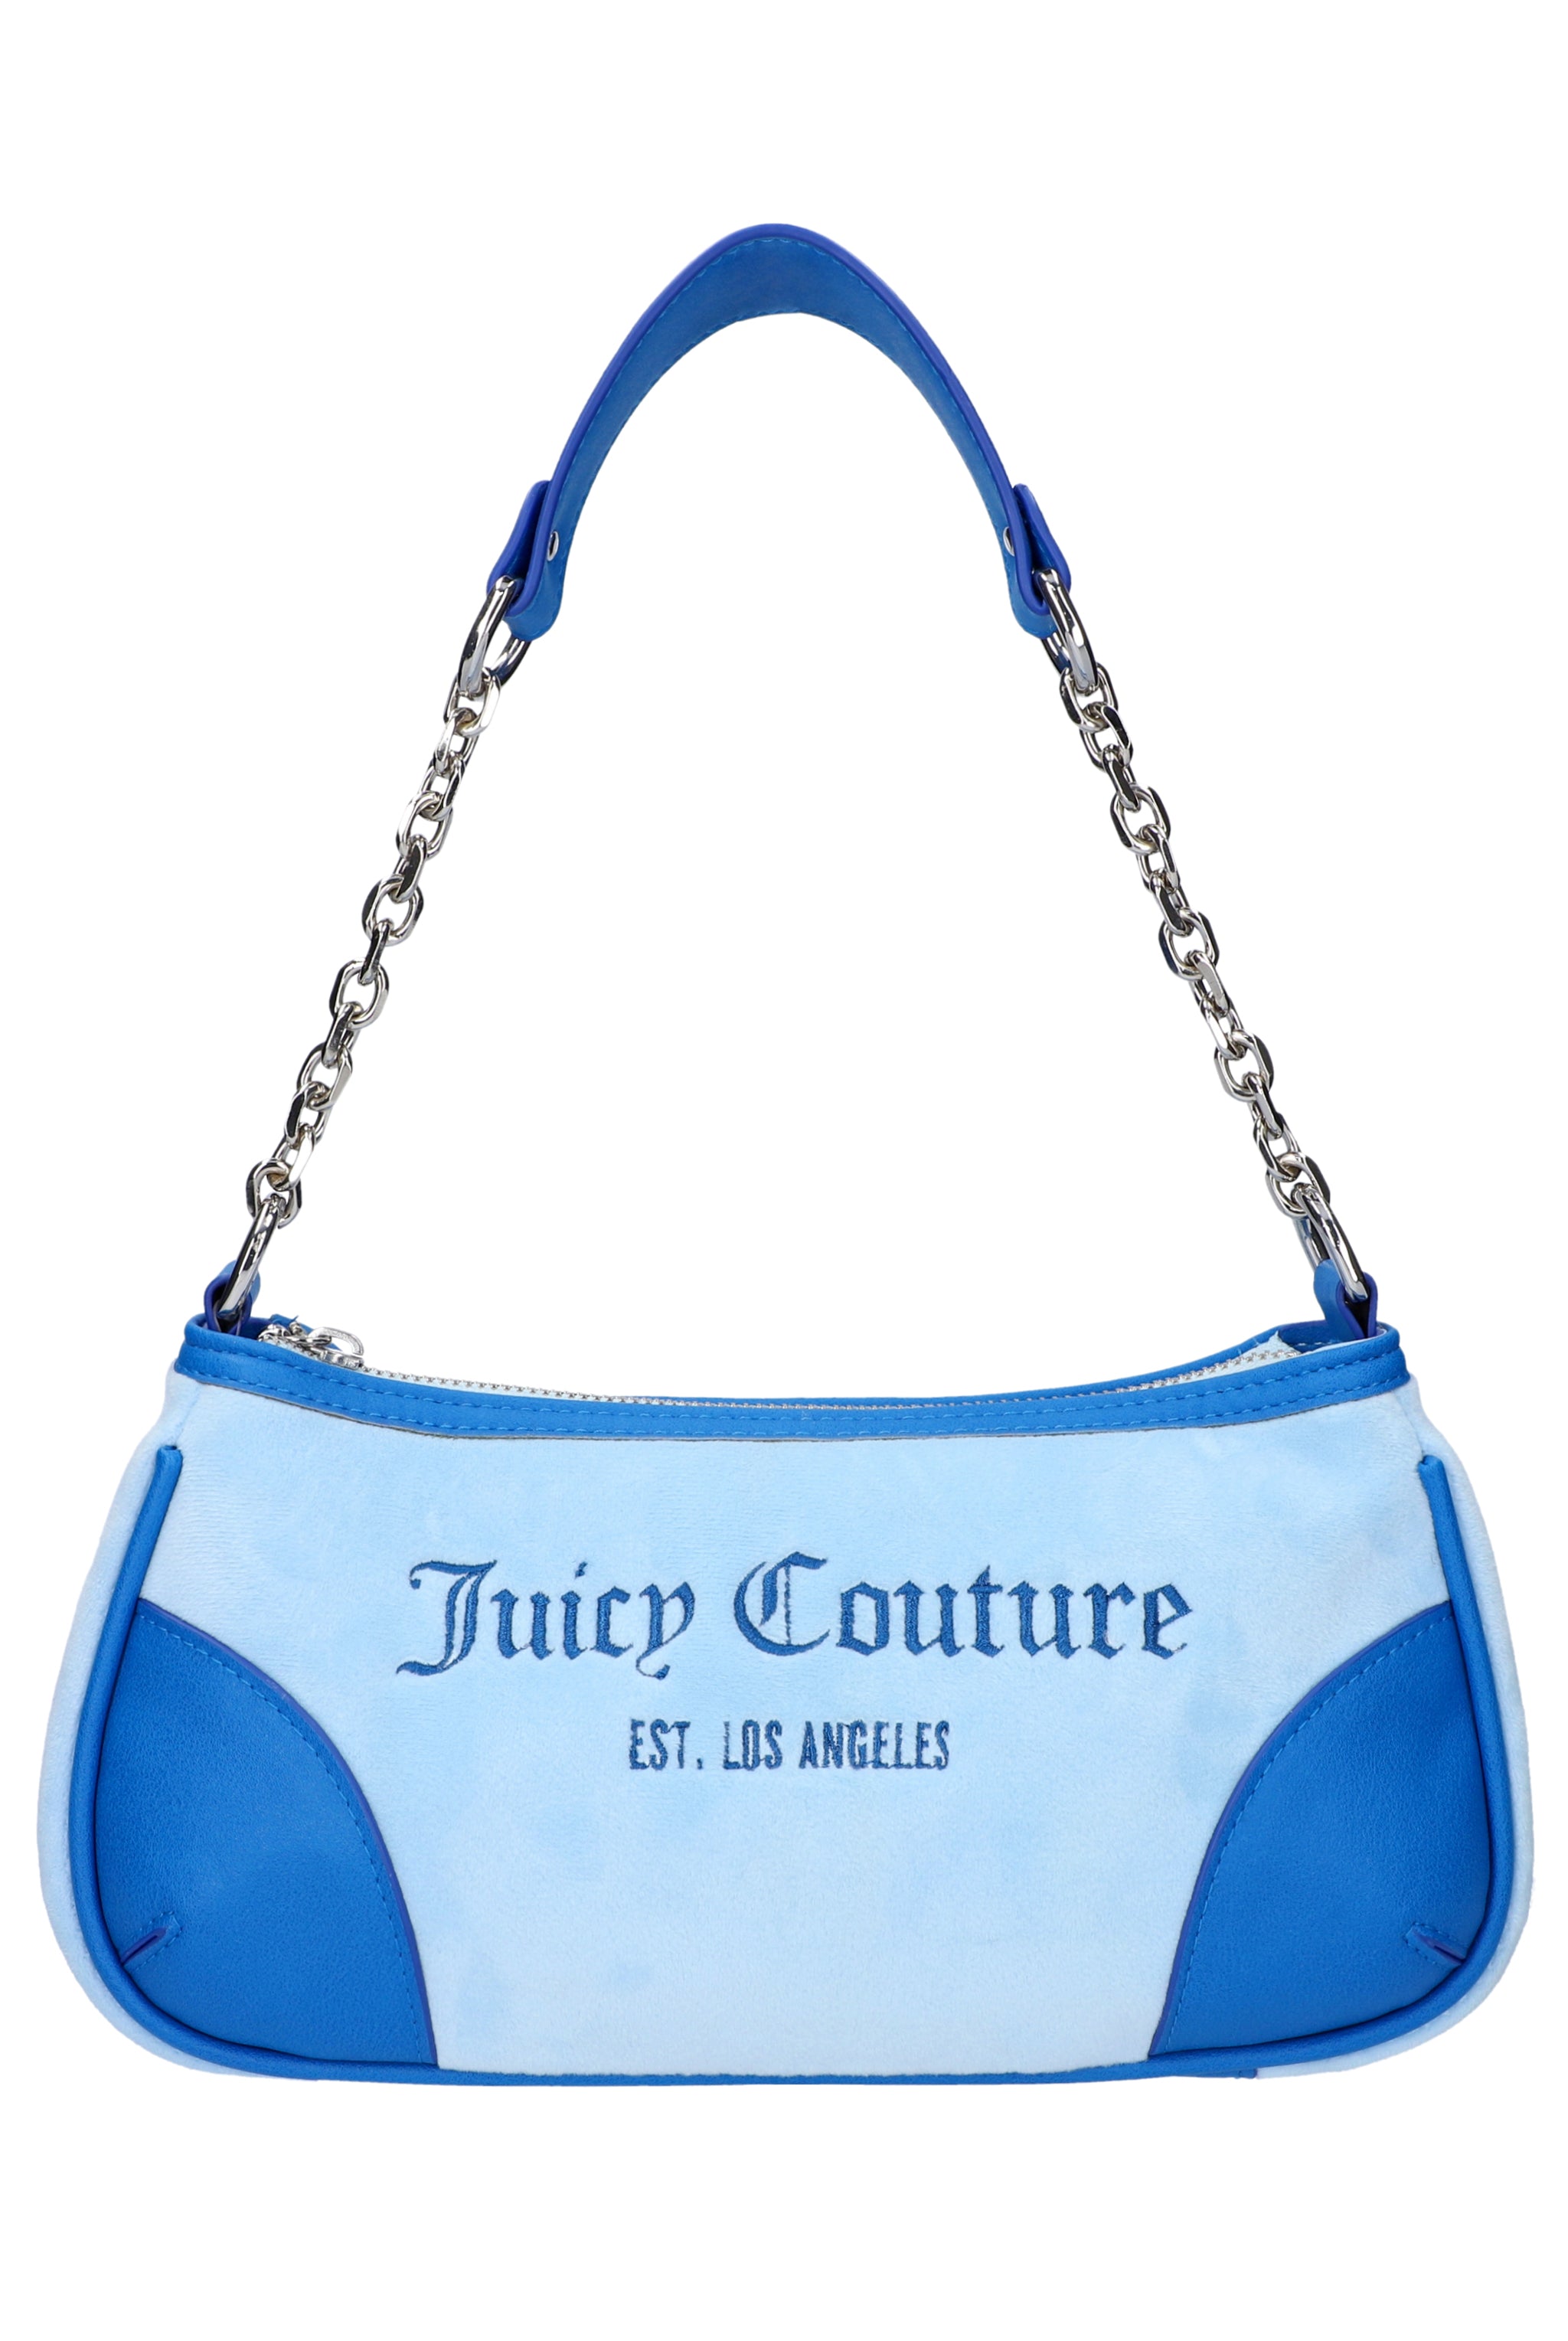 Juicy Couture Barrel Bag Purse | eBay